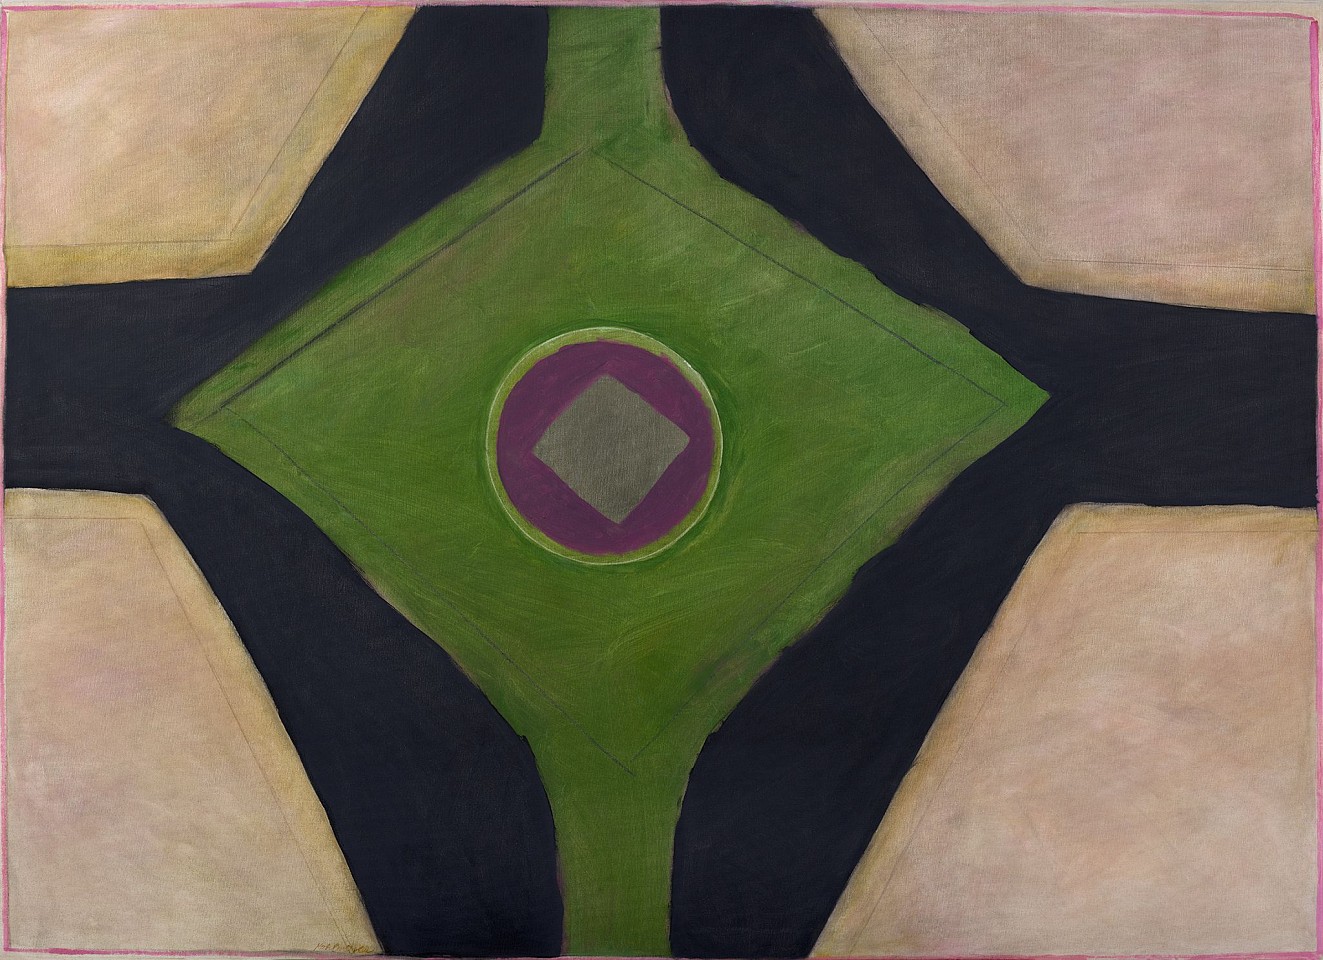 Ida Kohlmeyer, Geometric | SOLD, c. 1968
Mixed media on canvas, 46 1/4 x 64 1/4 in. (117.5 x 163.2 cm)
KOH-00013